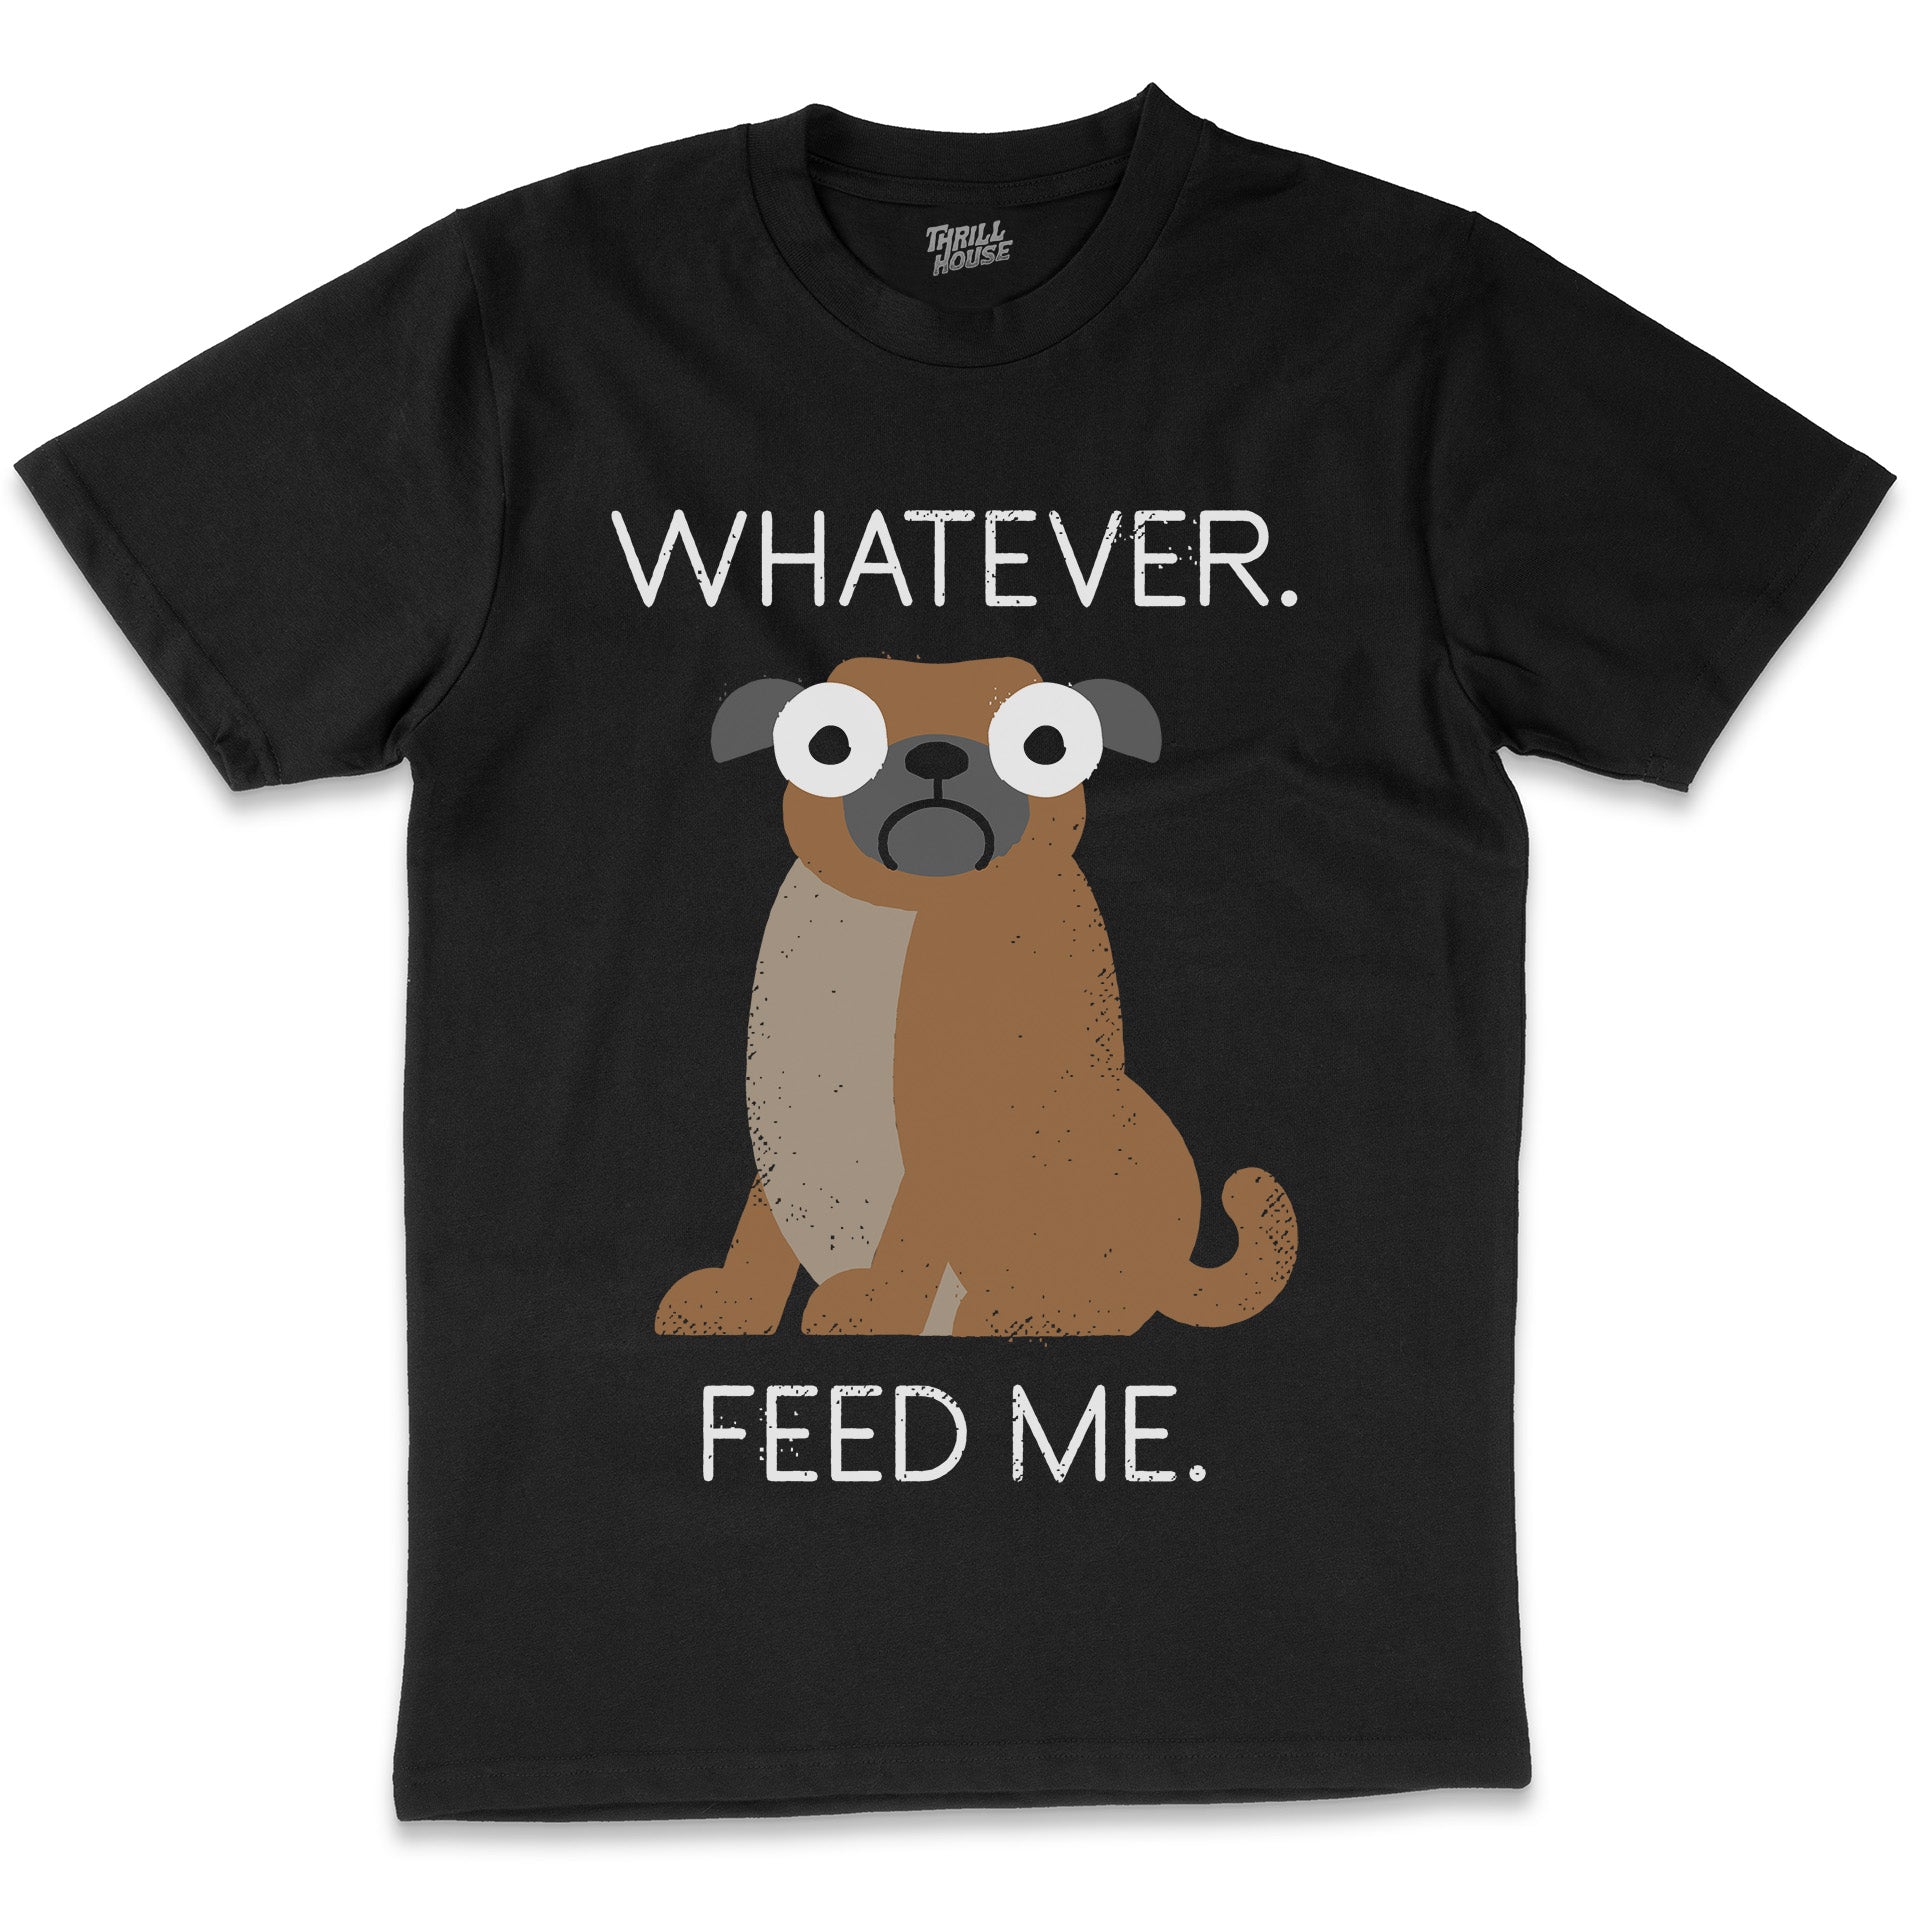 The Pugly Truth Funny Pug Dog Food Slogan Humorous Illustration Pet Animal Cotton T-Shirt